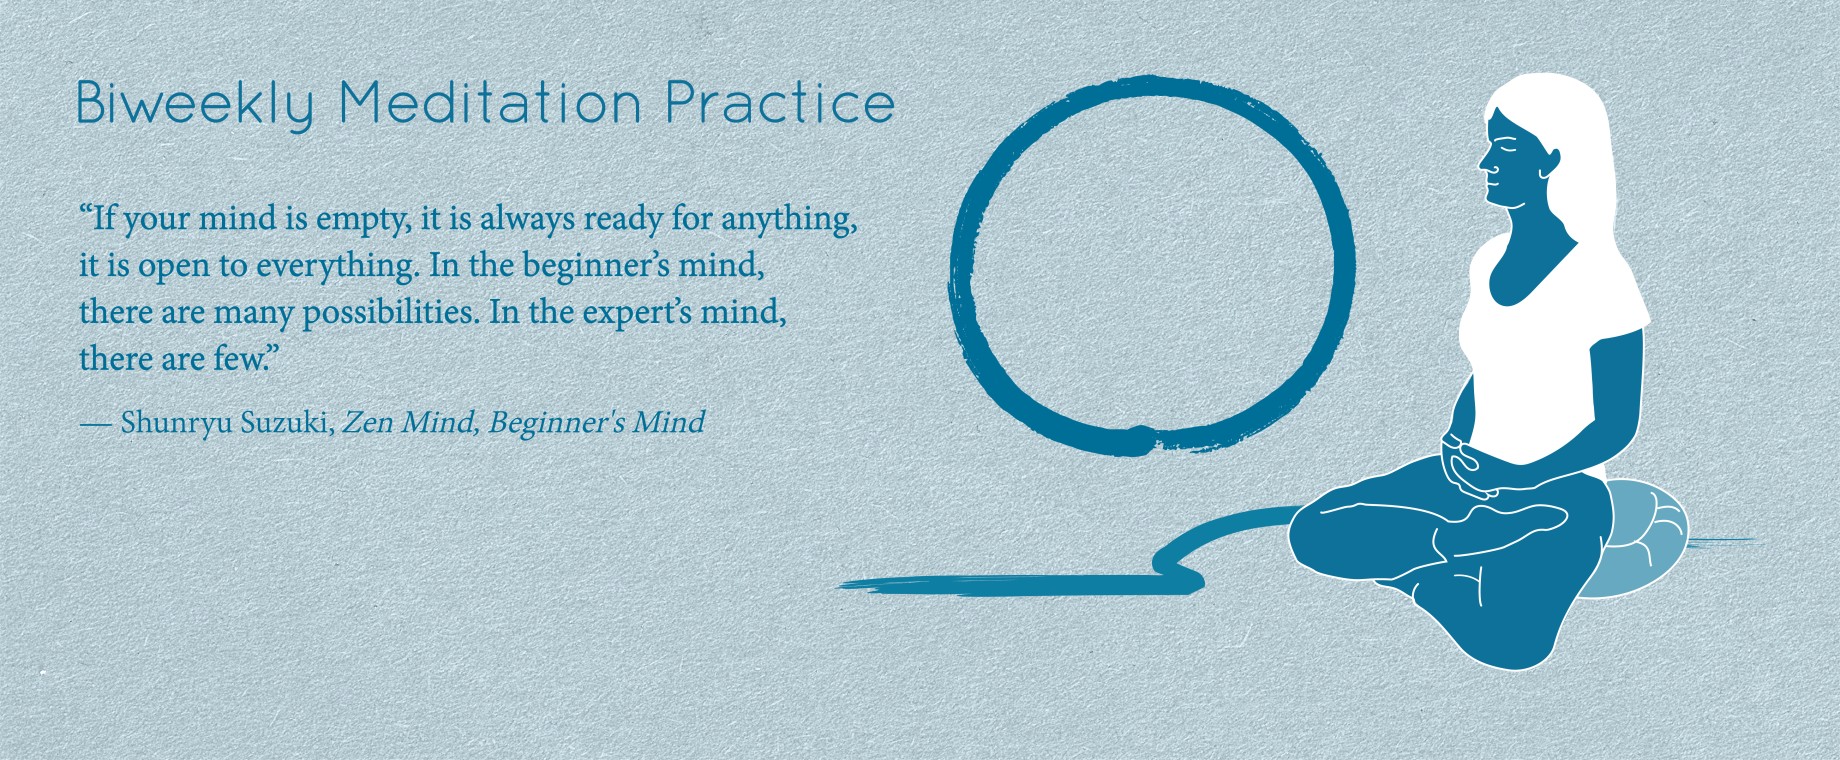 ildc-biweekly-meditation-practice_slide.jpg